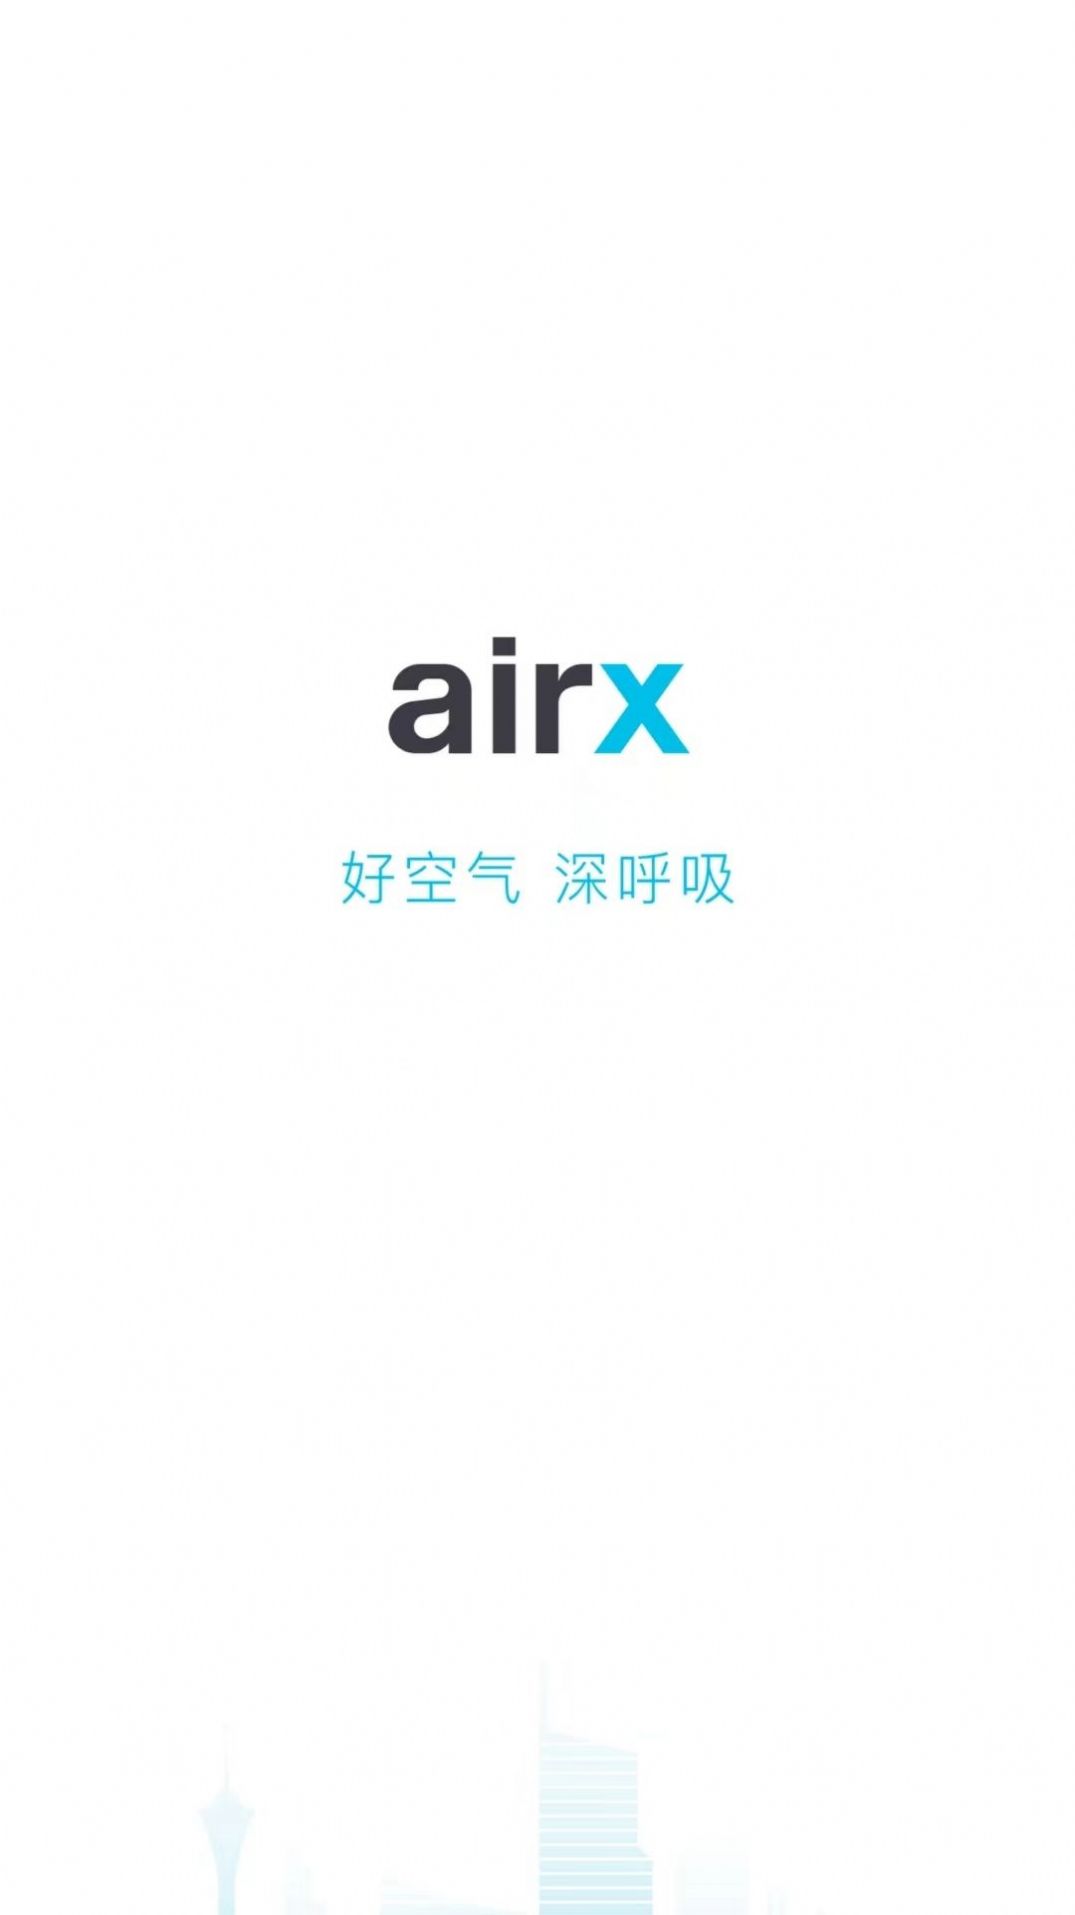 airx智能控制app官方版图片1